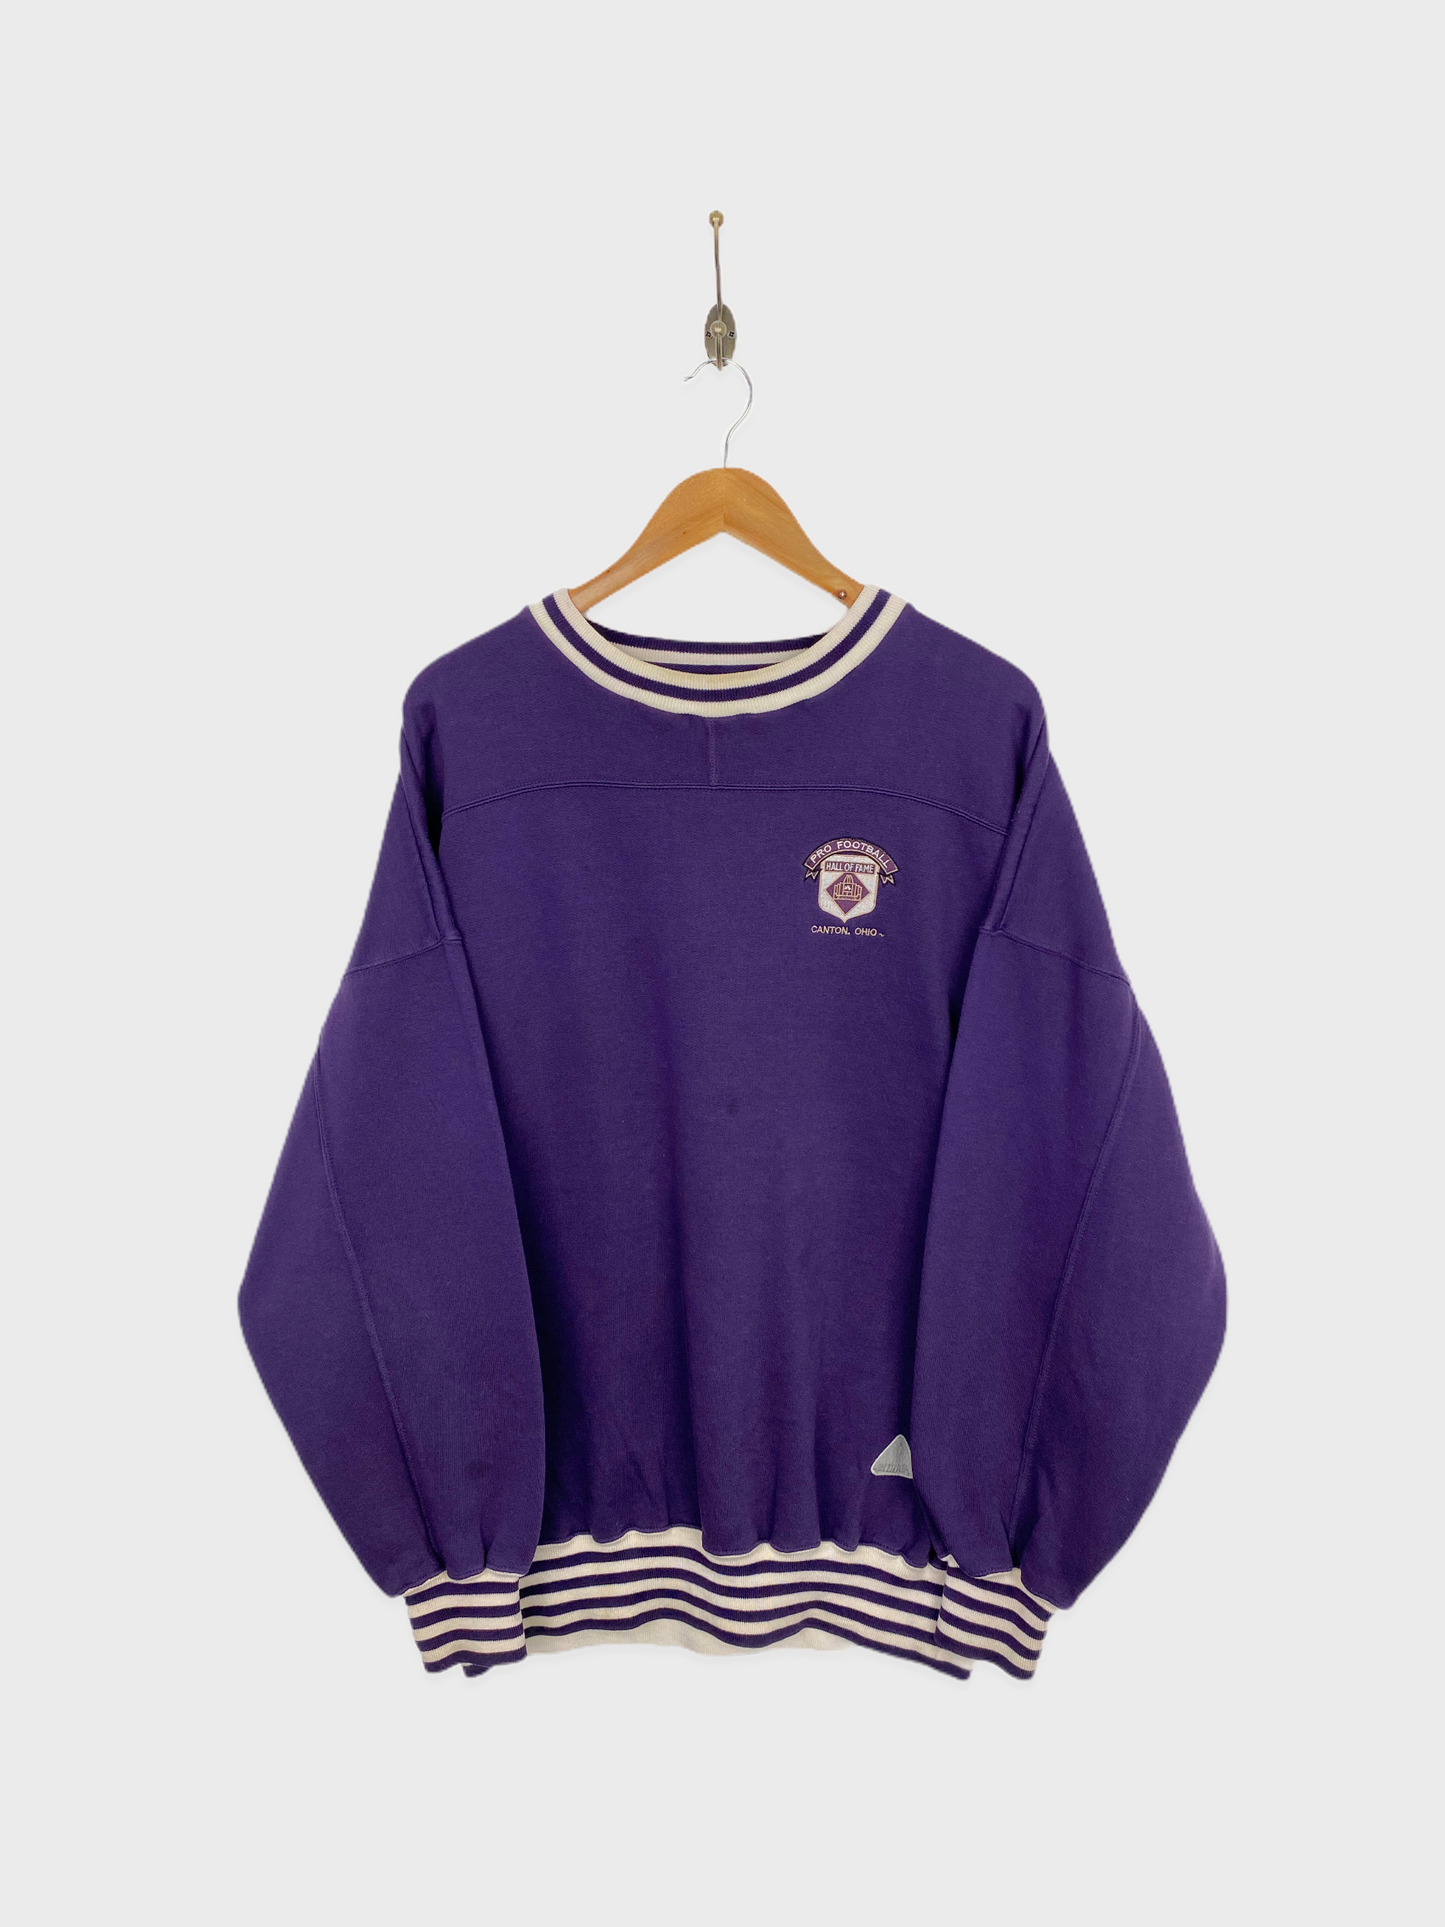 90's Canton Ohio Pro Football Embroidered Vintage Sweatshirt Size XL